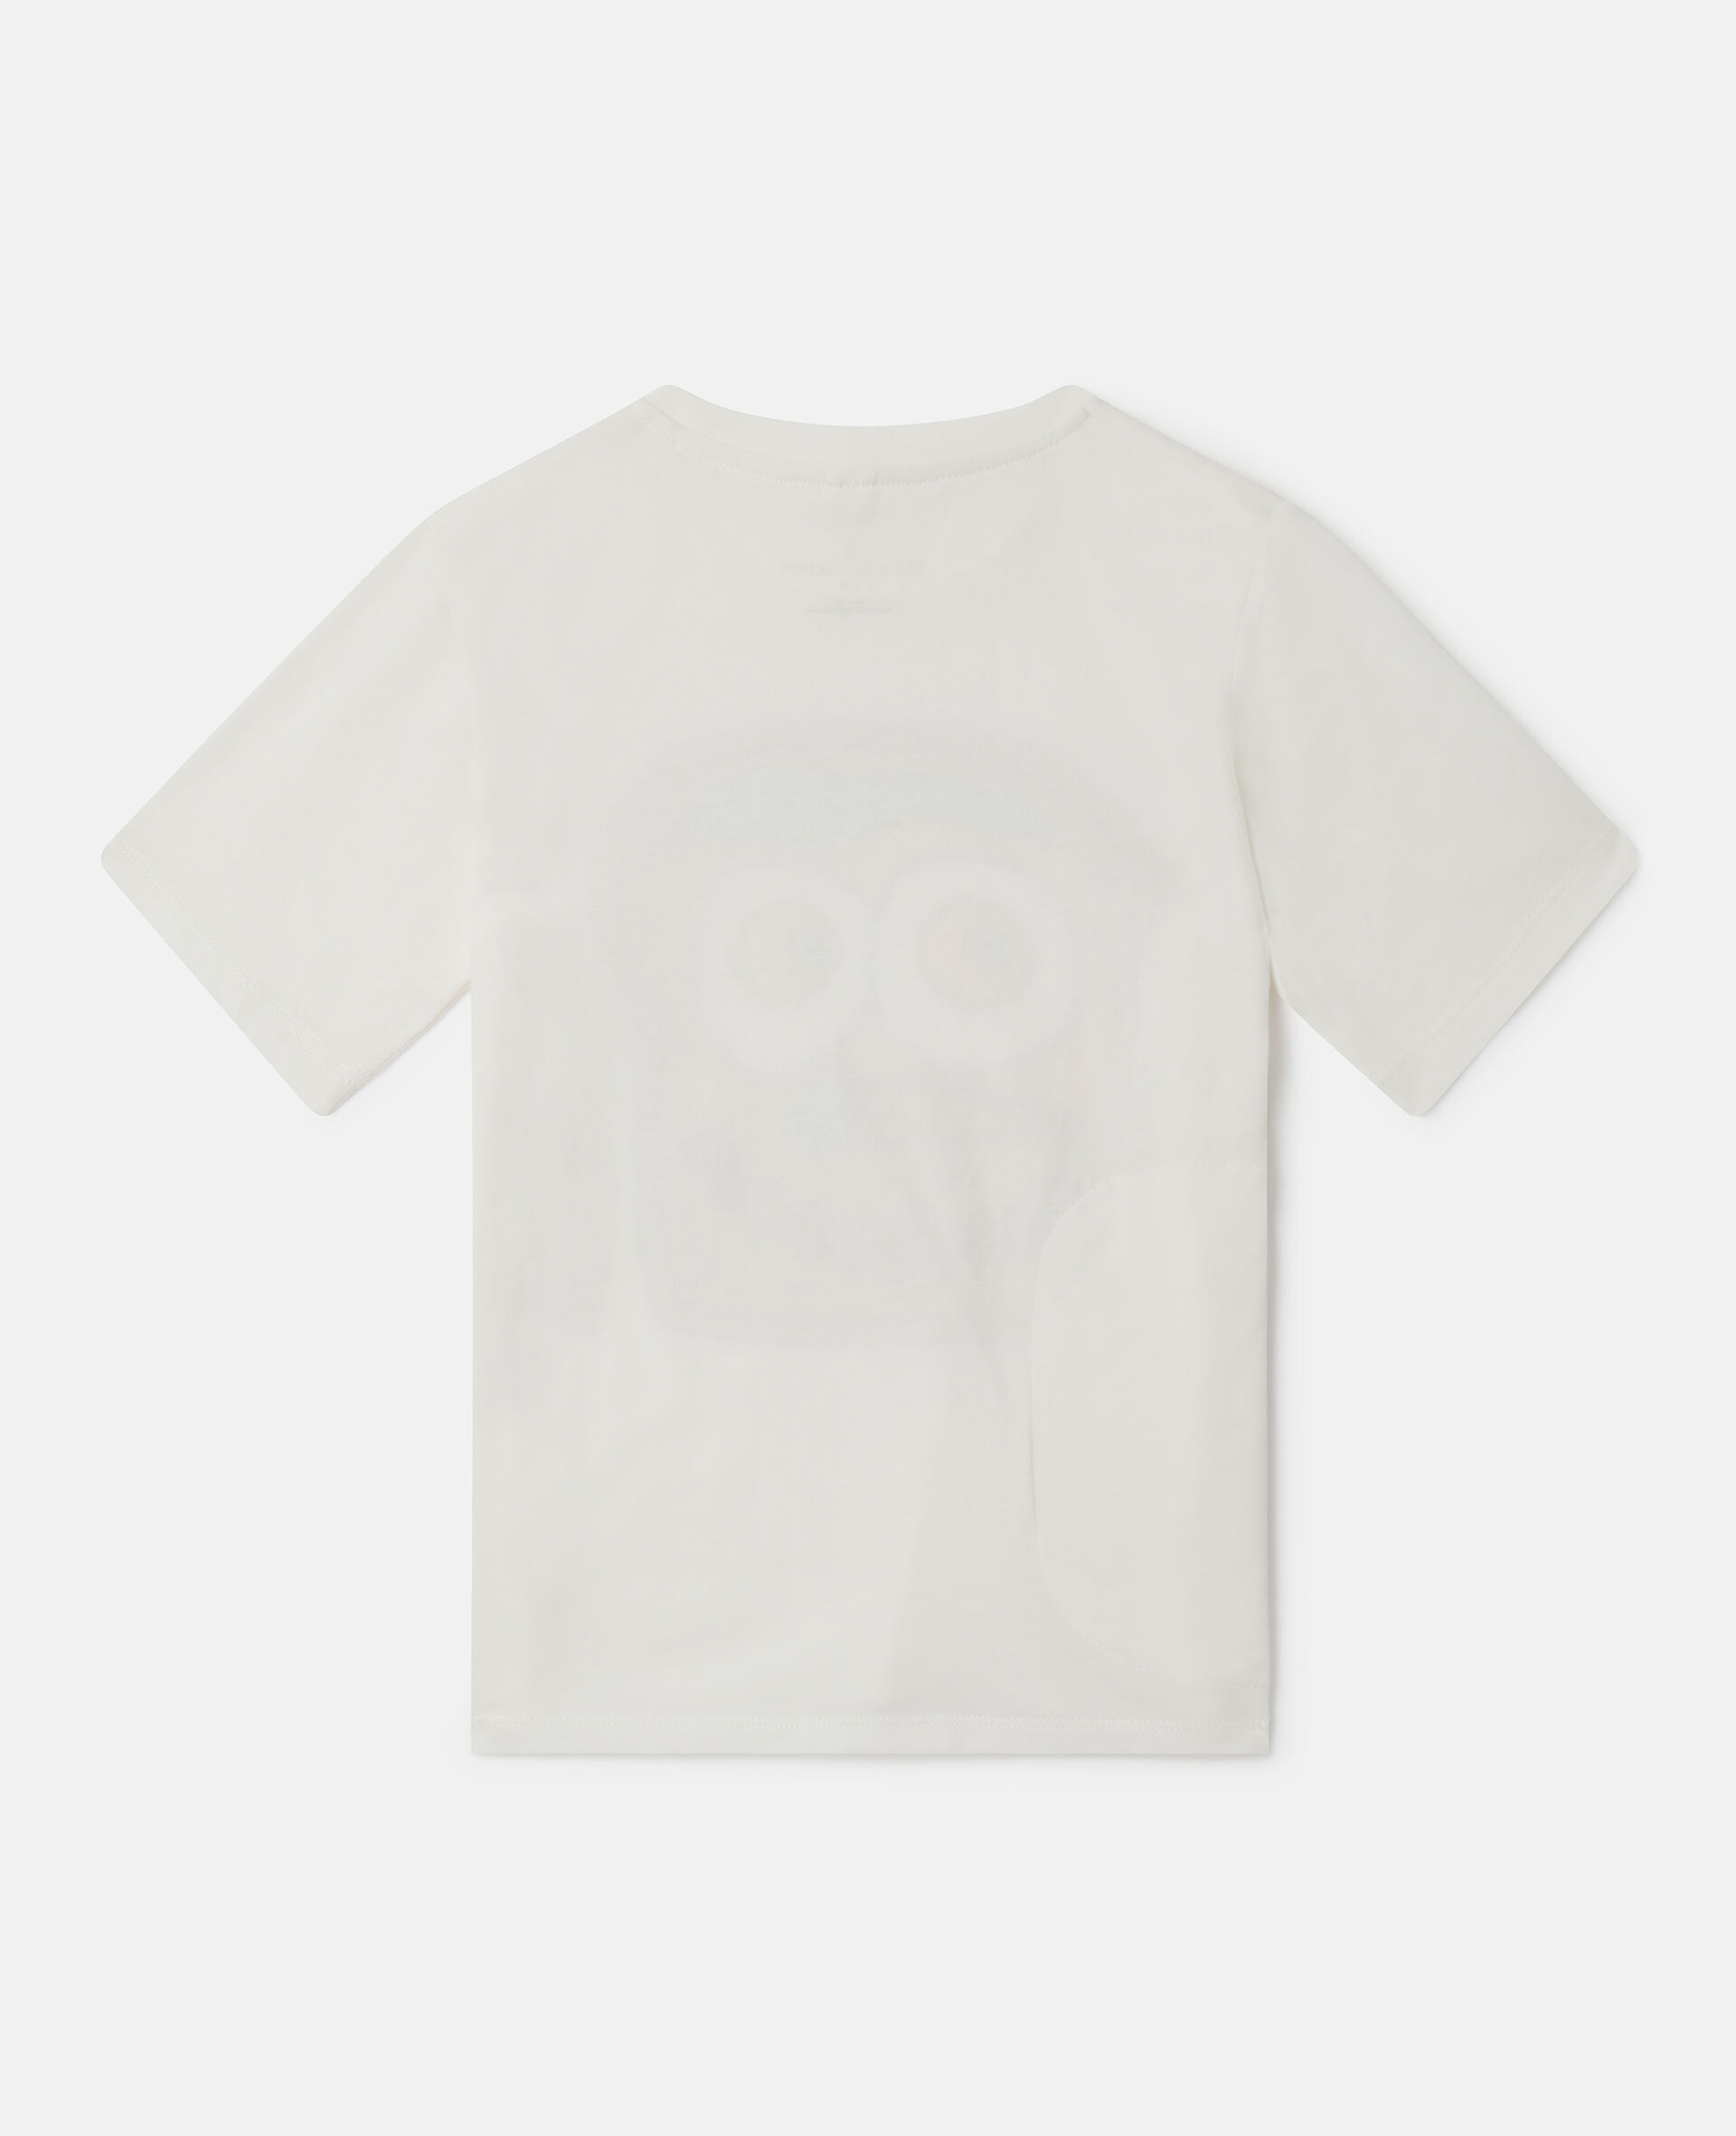 Boys T-Shirts, Printed T-Shirts & Tops